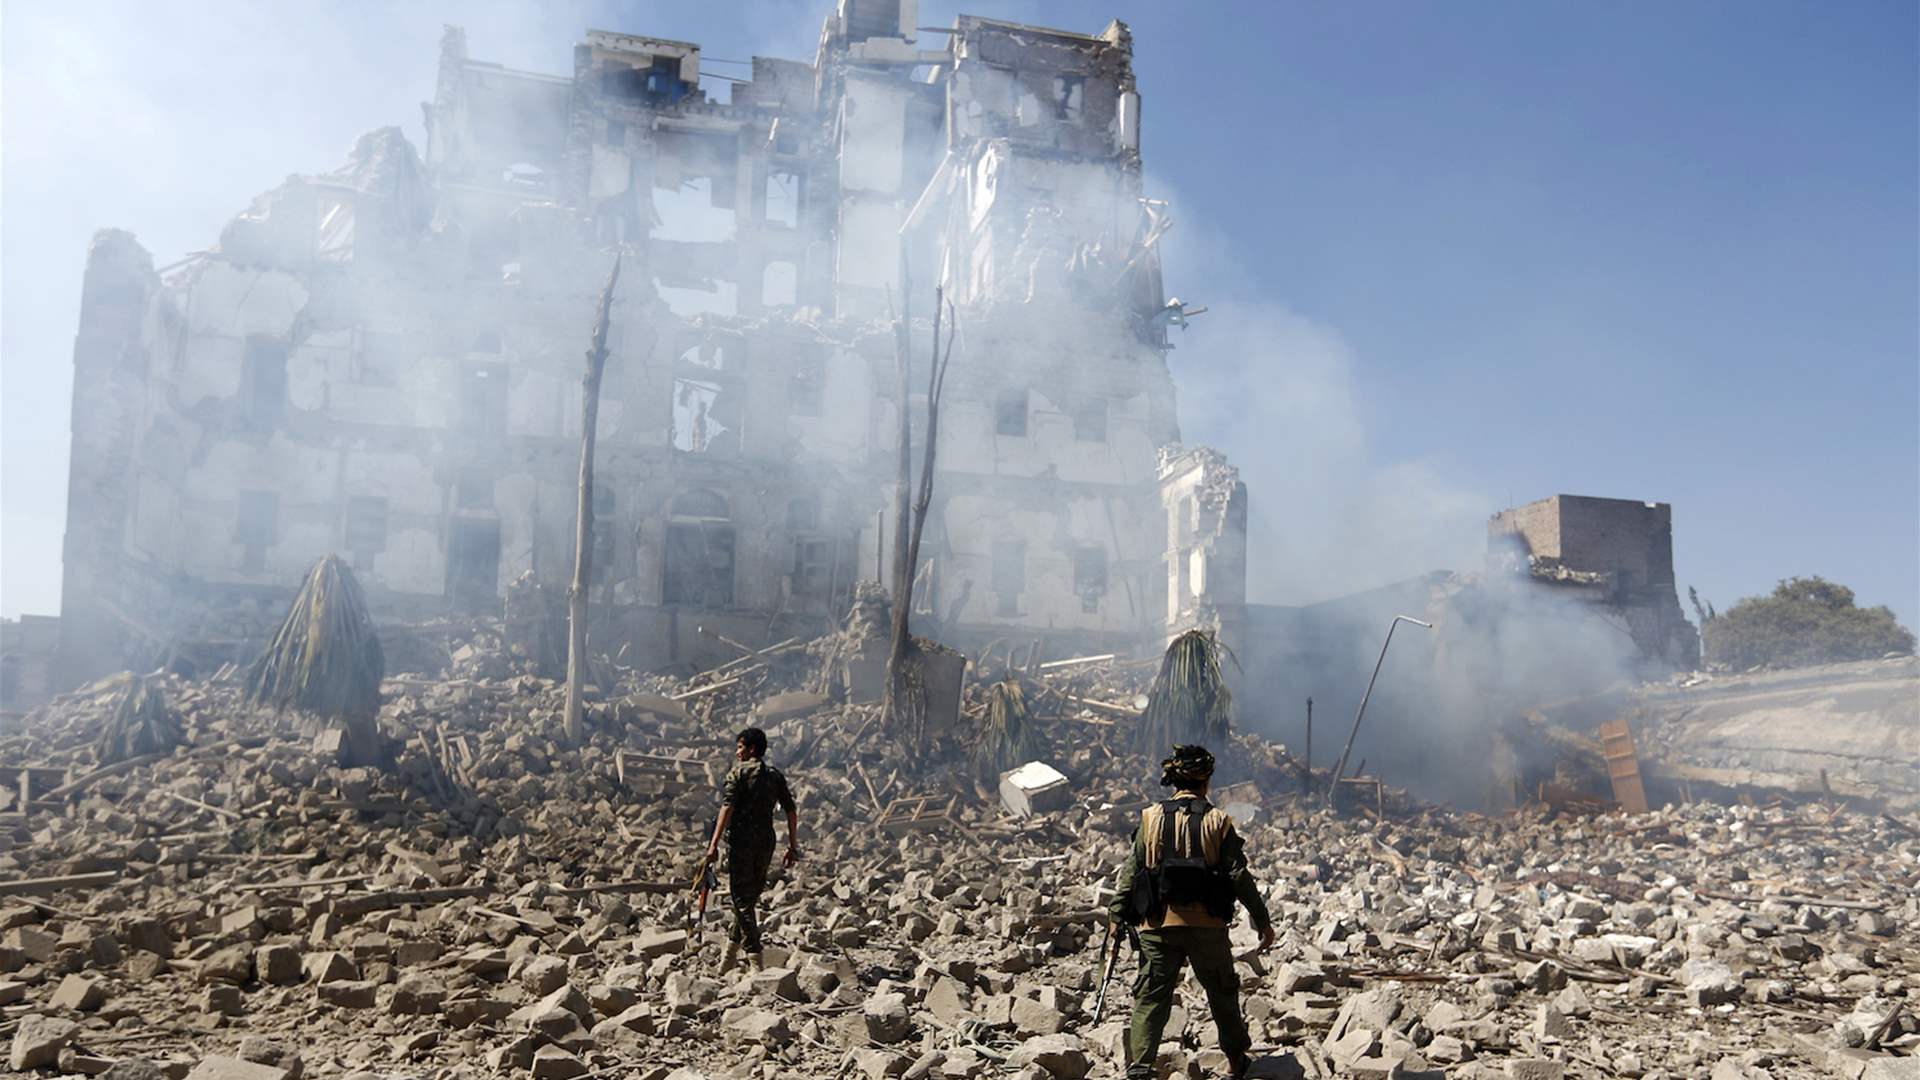 &#39;Economic warfare&#39;: Yemenis struggle despite ease in fighting